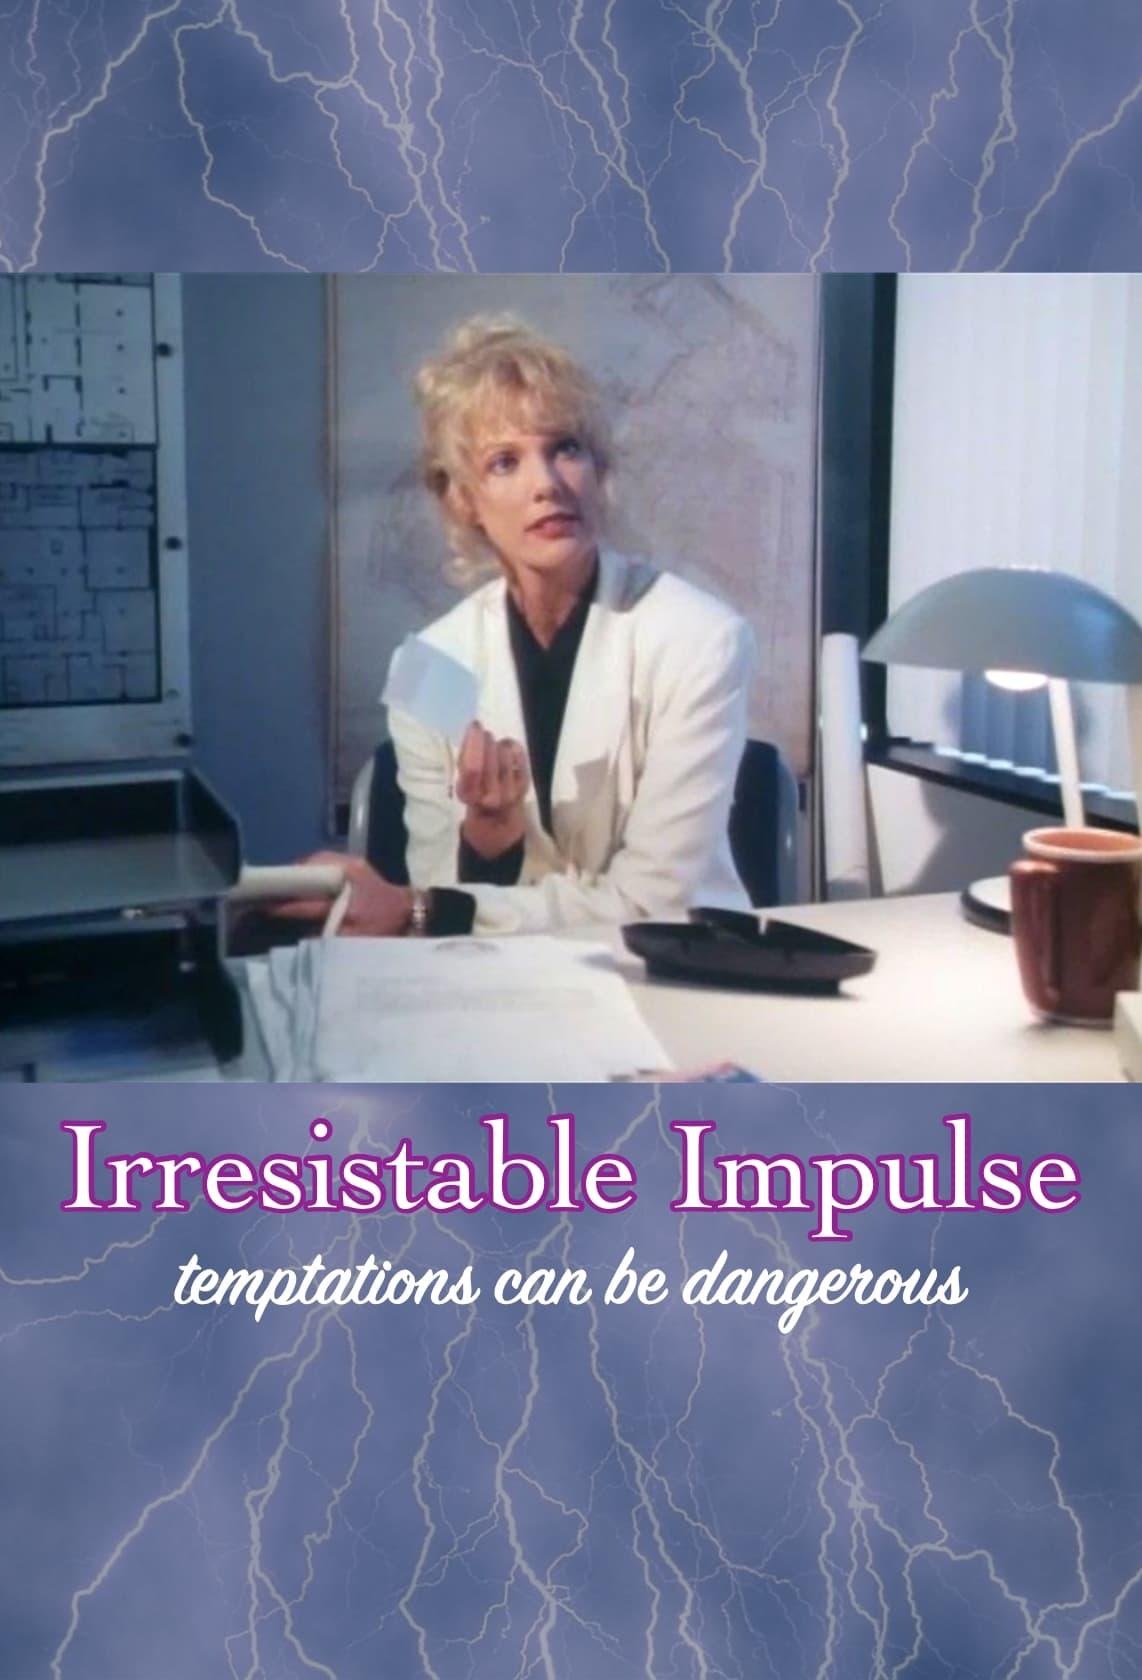 Irresistible Impulse poster